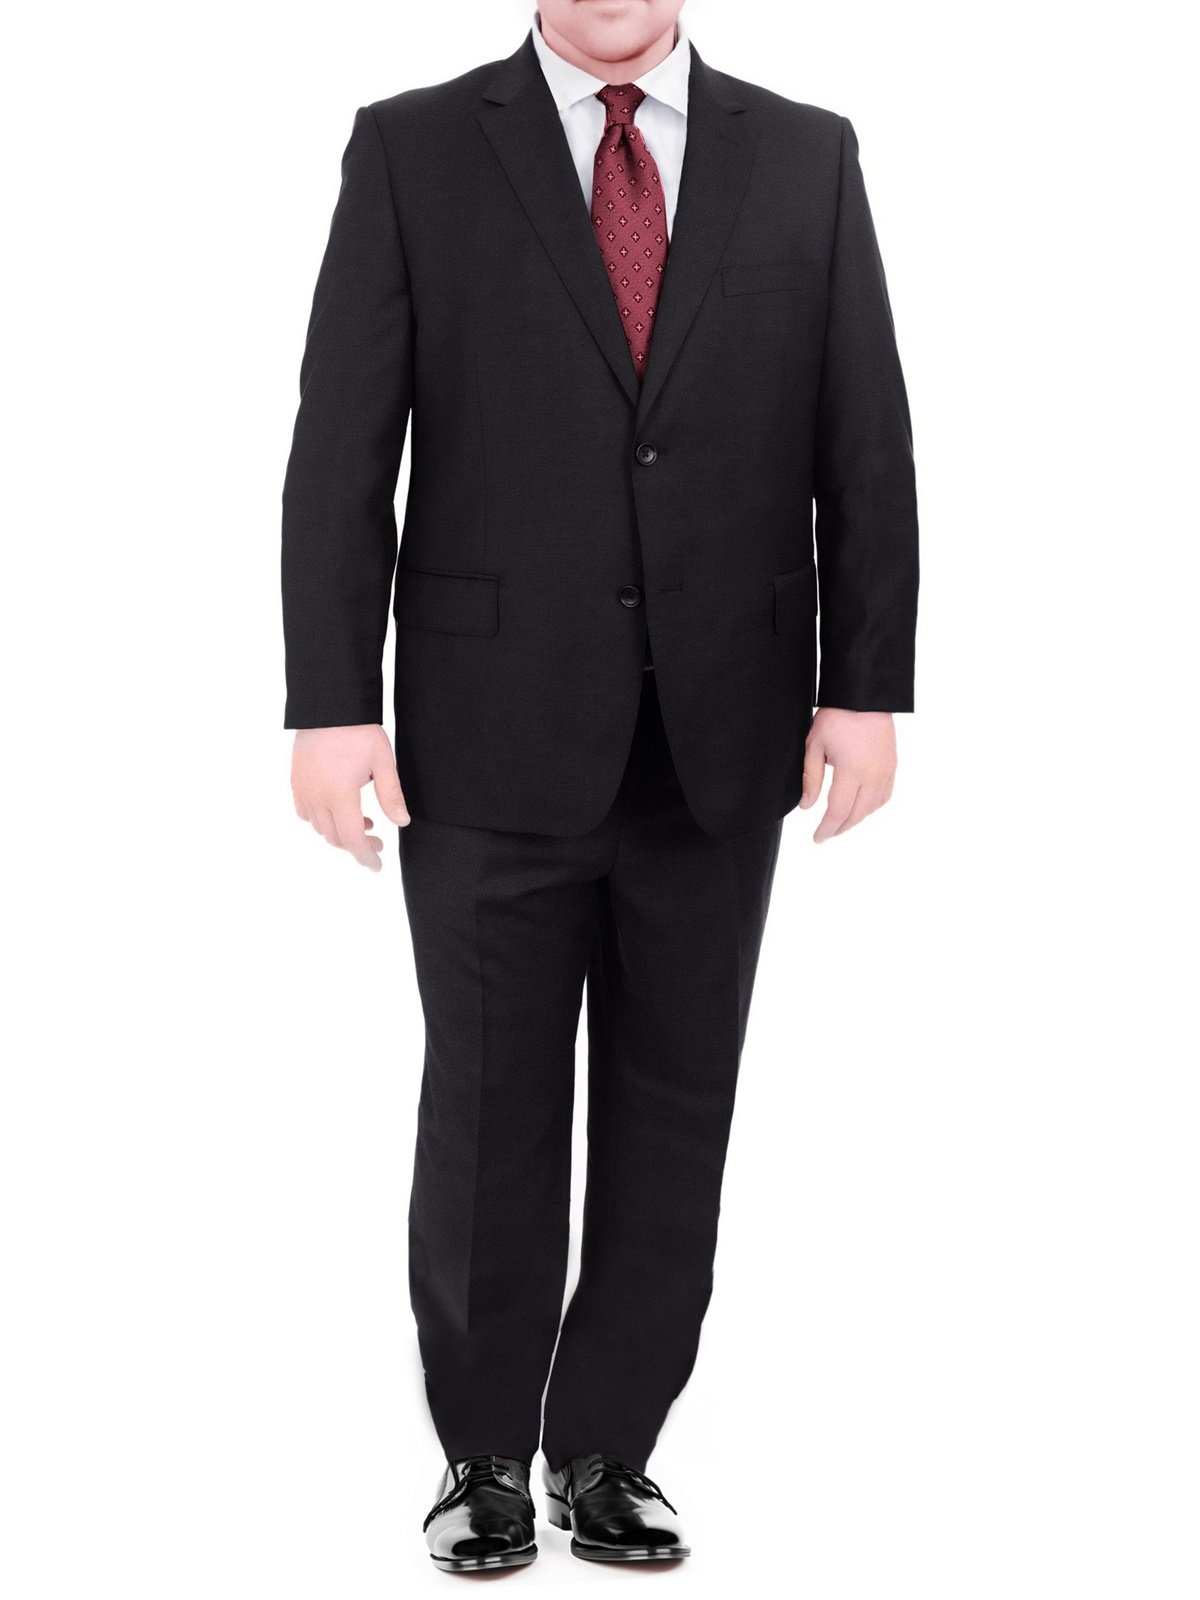 Tall Men's Black Suit Jacket | American Tall